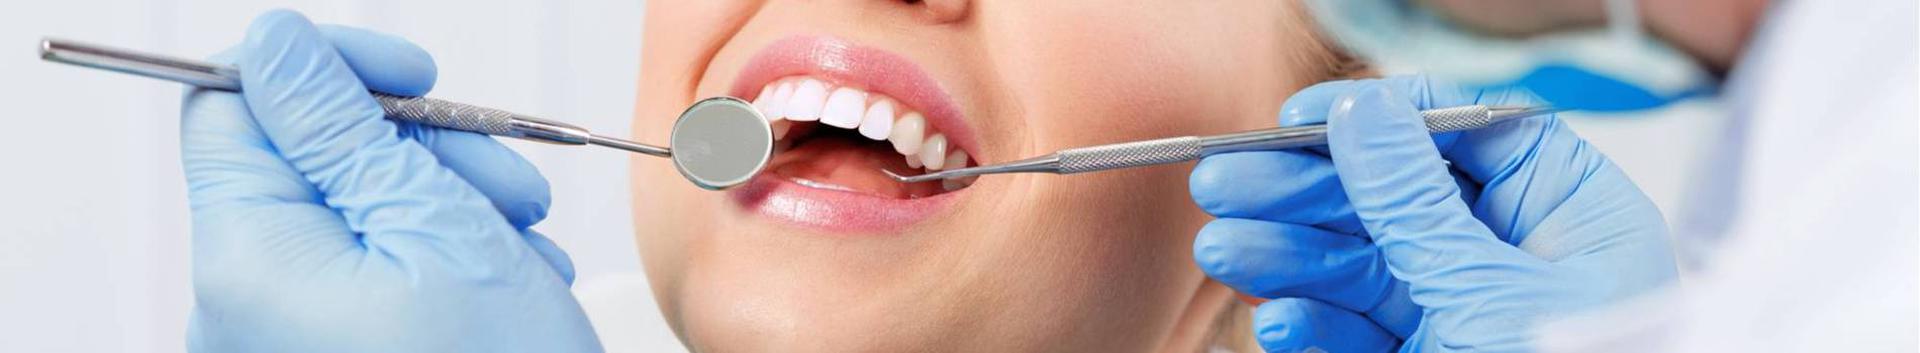 Dentist, Treatment of tooth roots, Dental Surgery, Dental crowns and bridges, dental prosthetics, Dental prosthesis, dental x-ray, Treatment of gums